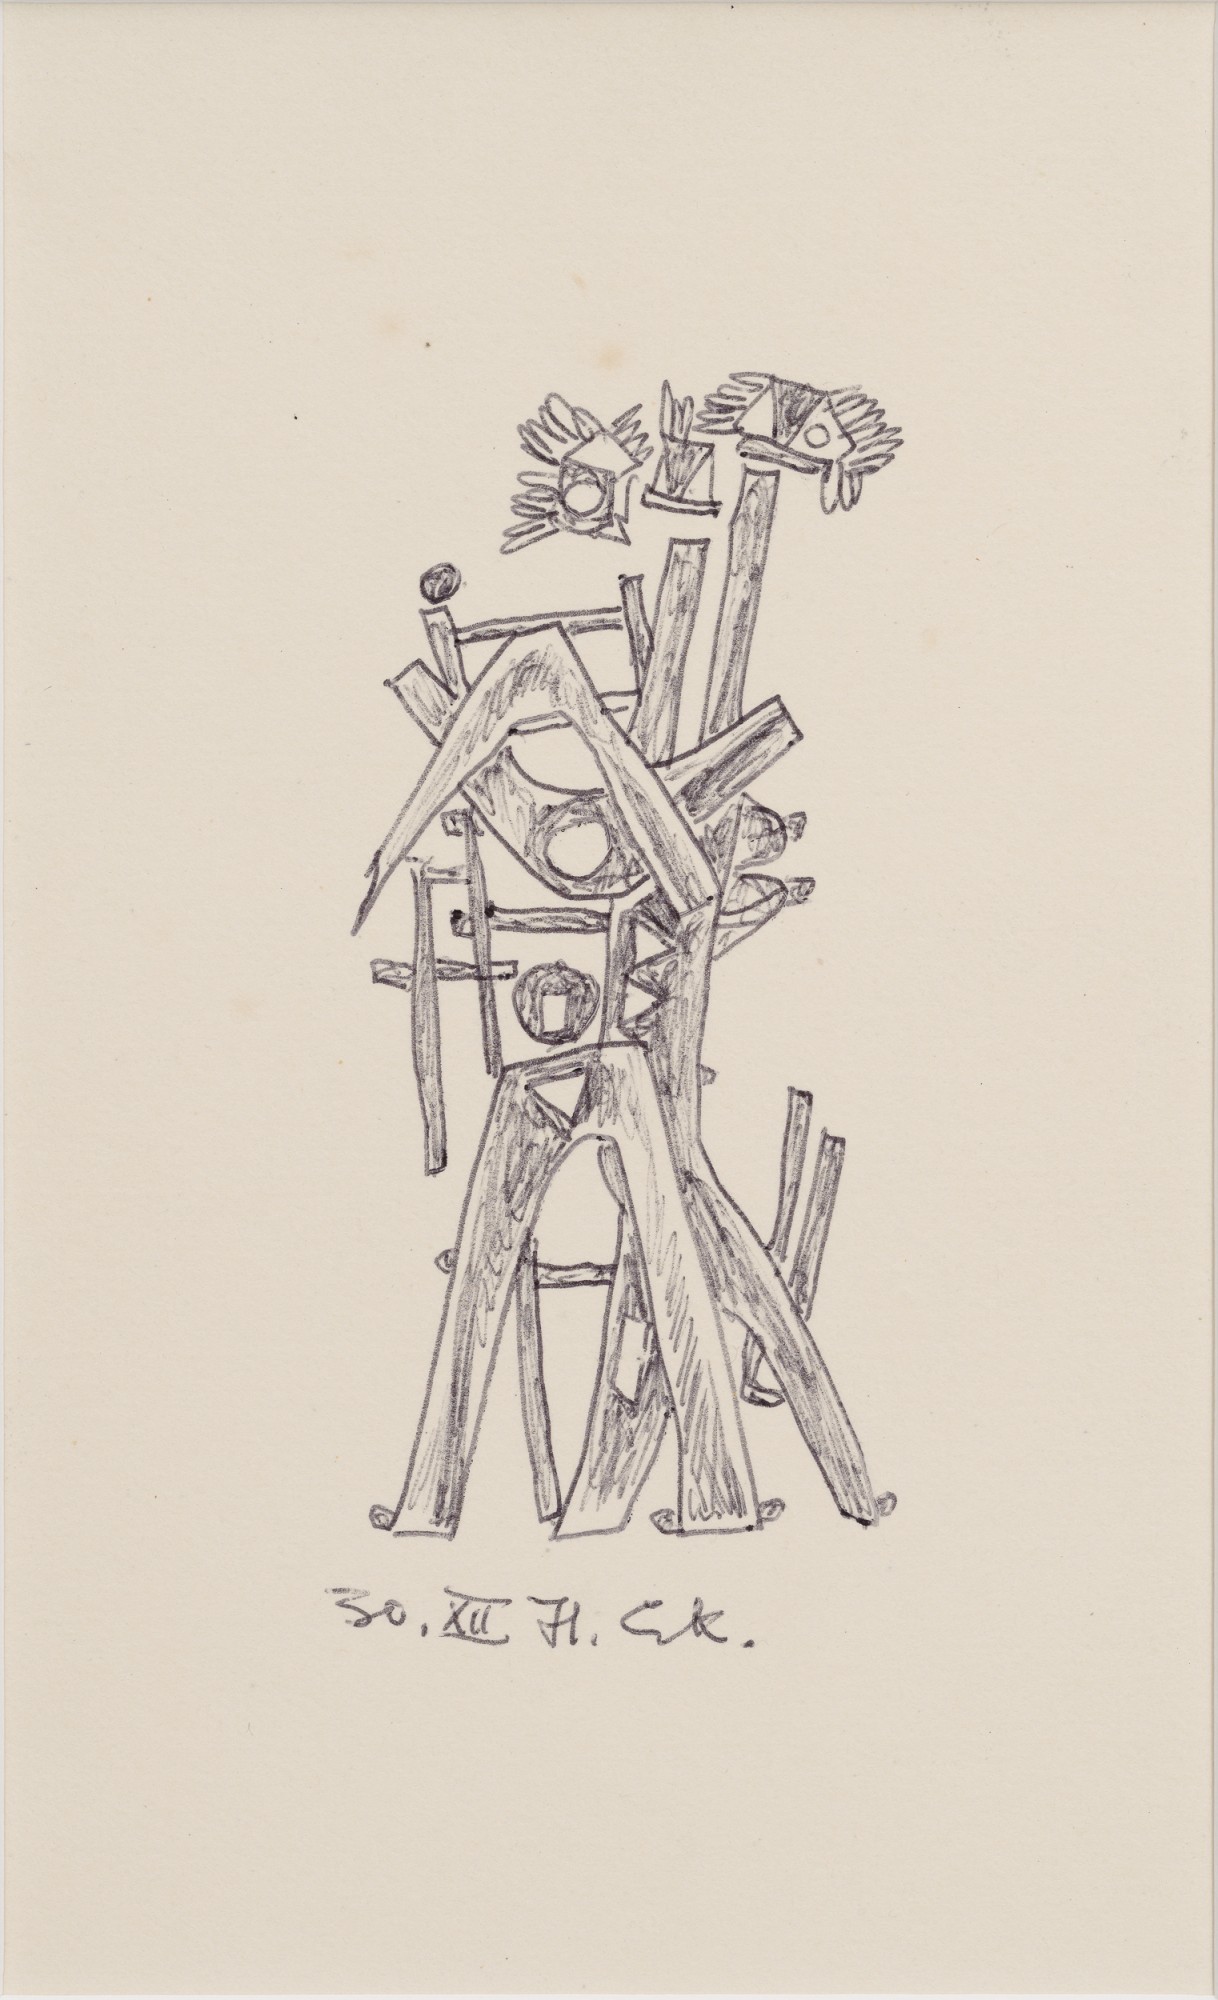 Elmar Kits "Abstraction I"